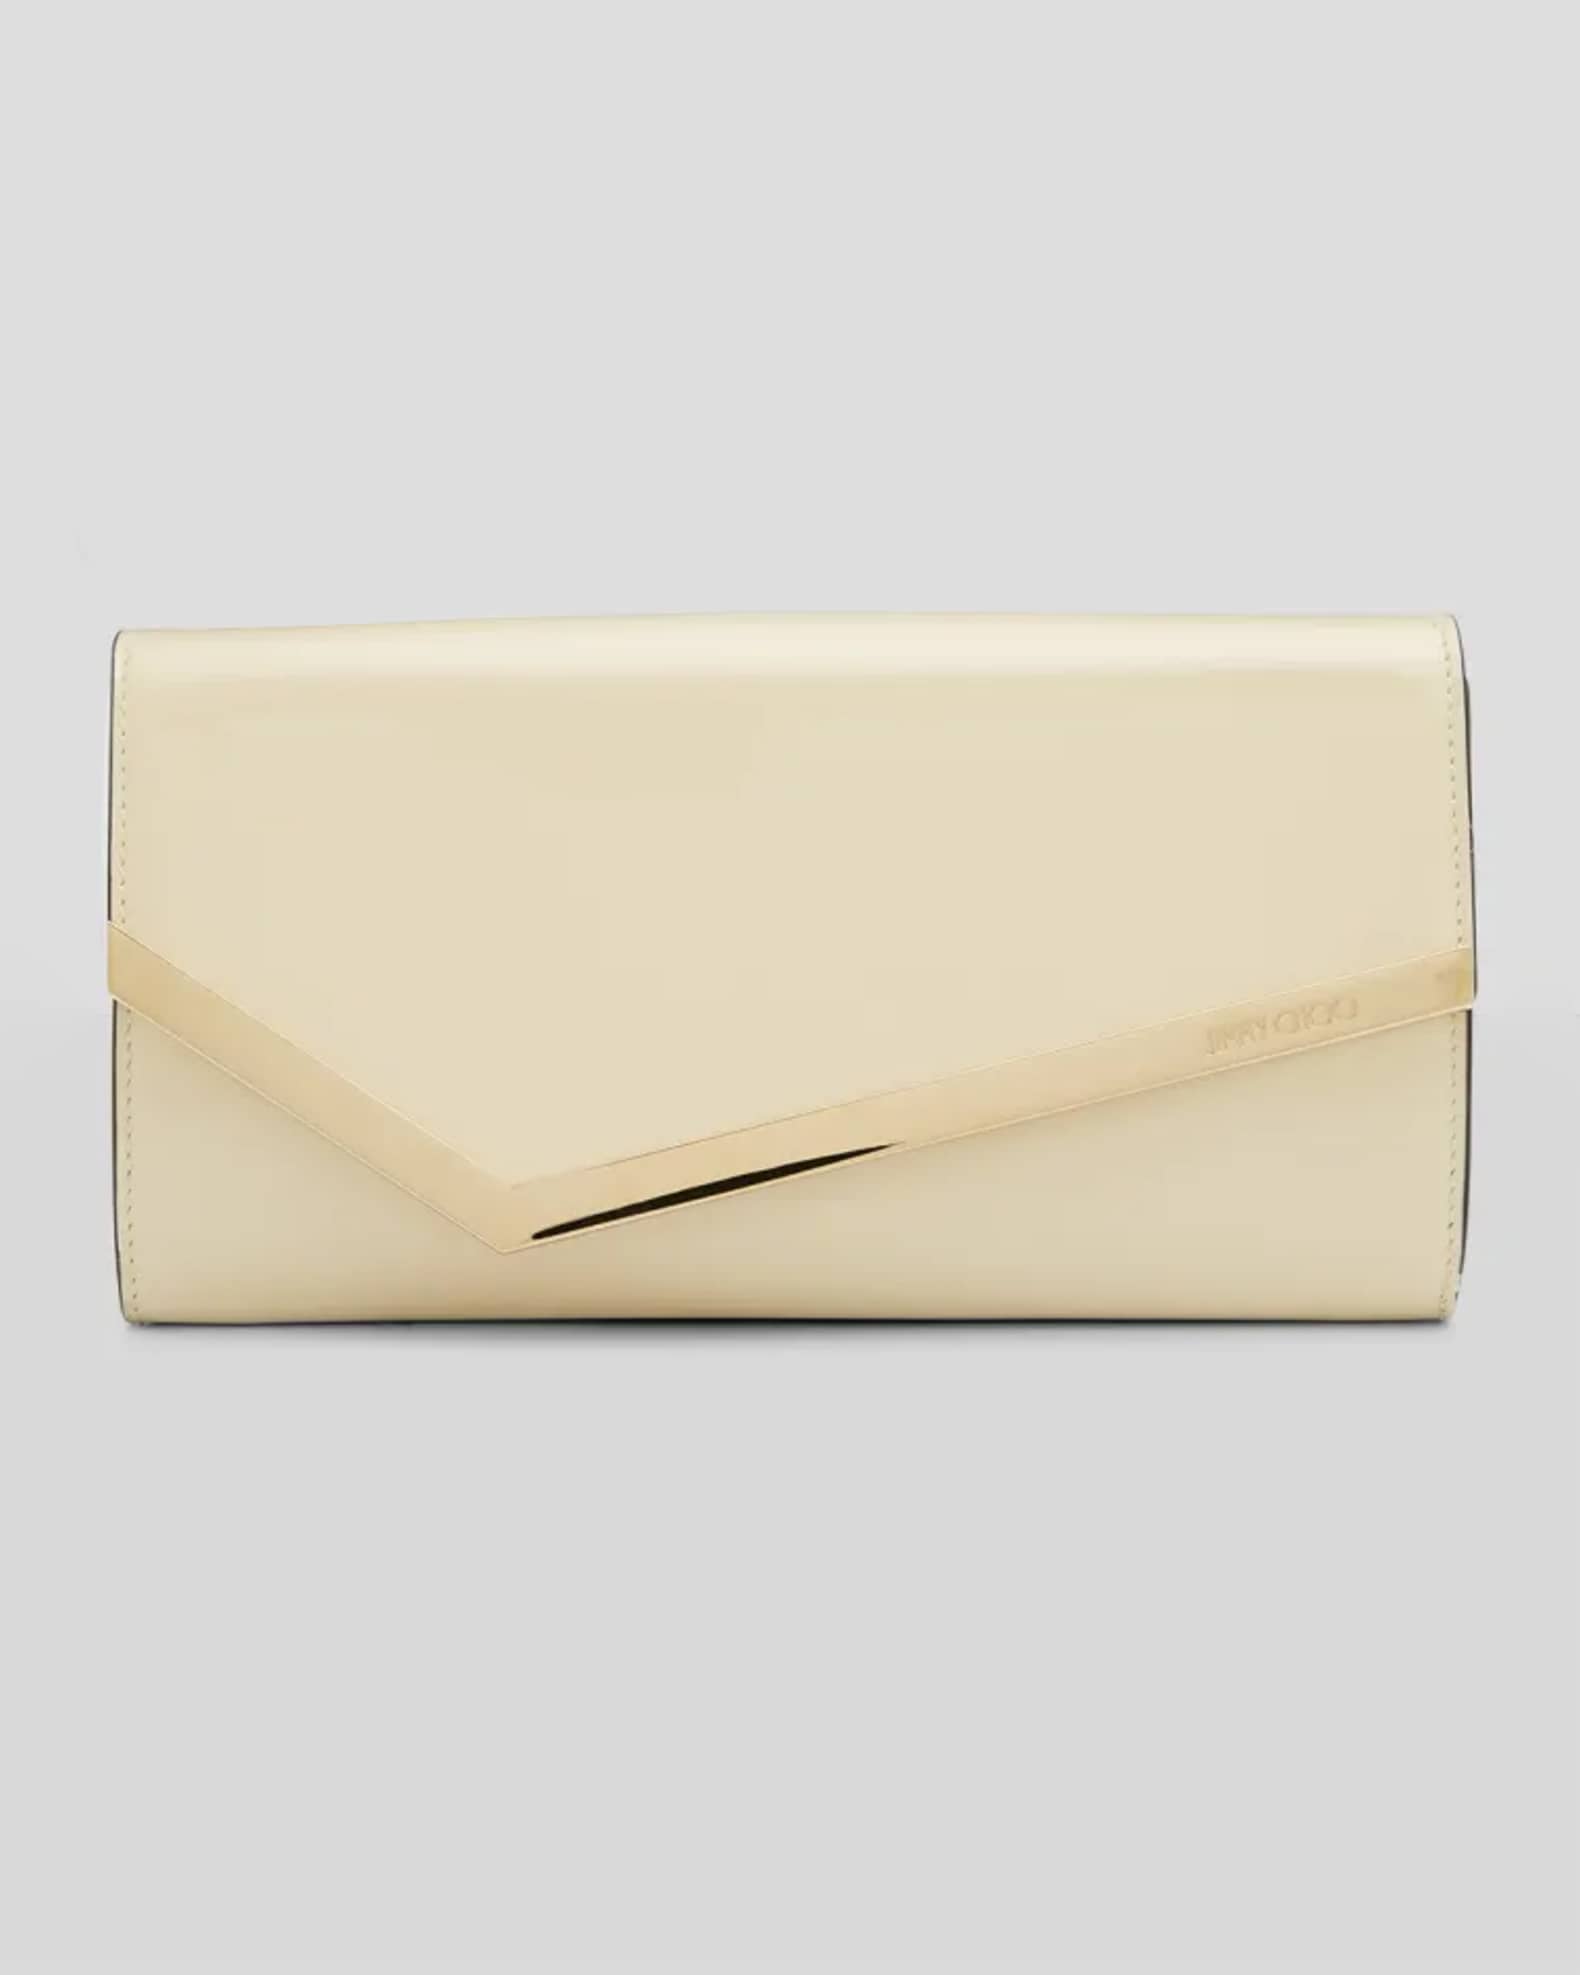 Ideaal De Alpen rundvlees Jimmy Choo Emmie Flap Patent Leather Clutch Bag | Neiman Marcus